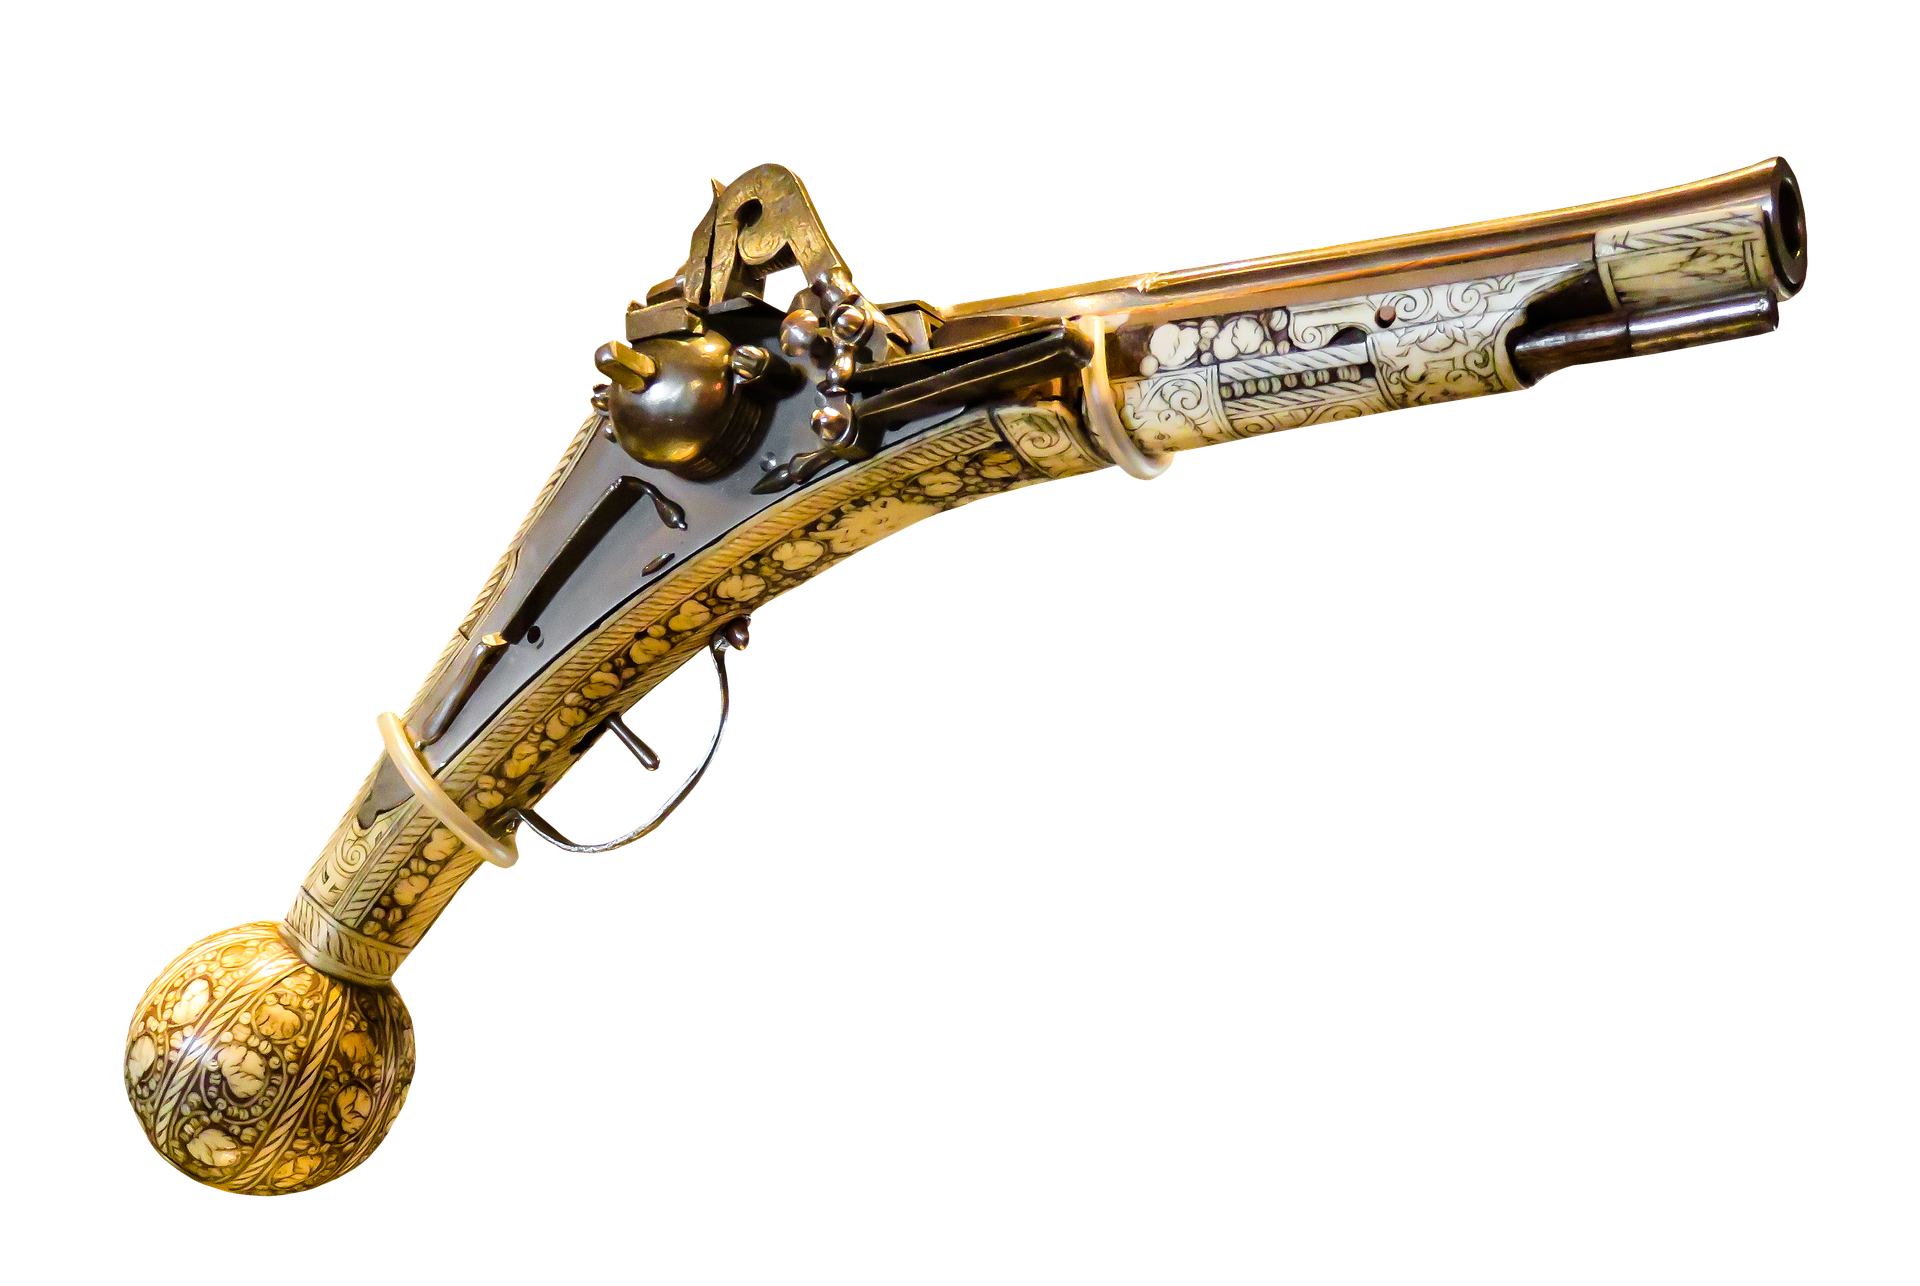 Antique pistol photo